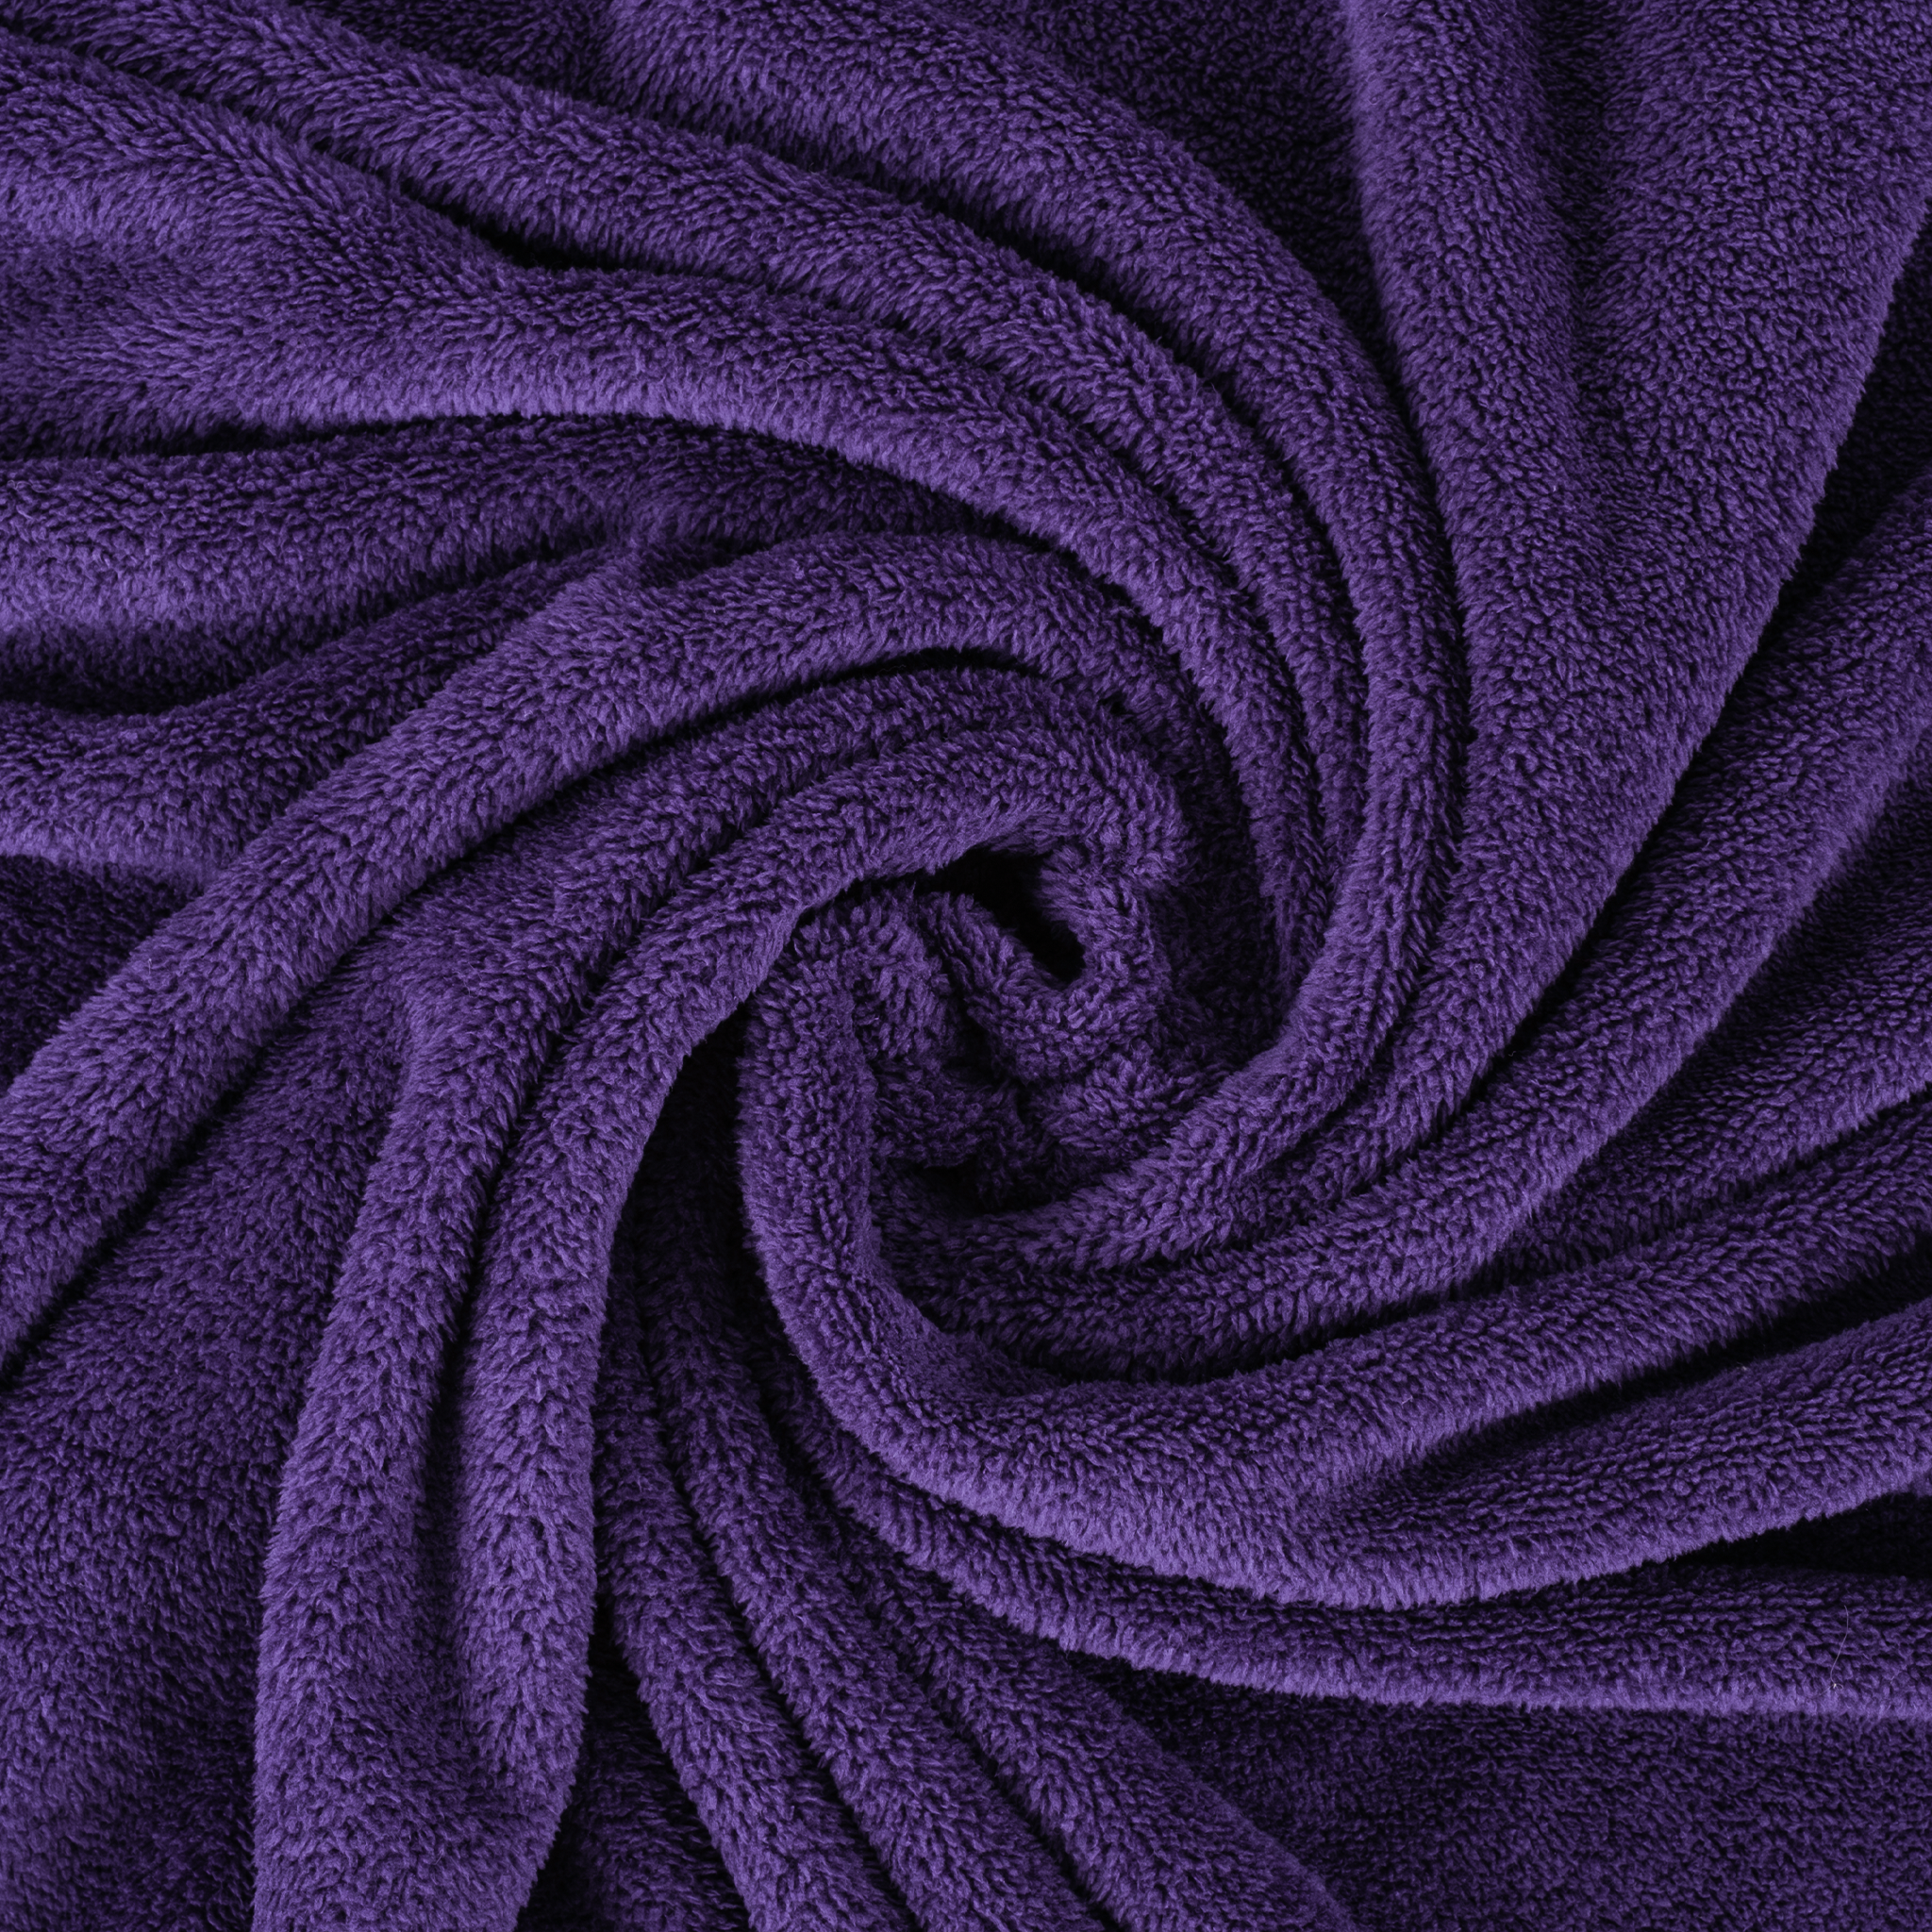 American Soft Linen - Bedding Fleece Blanket - Throw Size 50x60 inches - Purple - 5